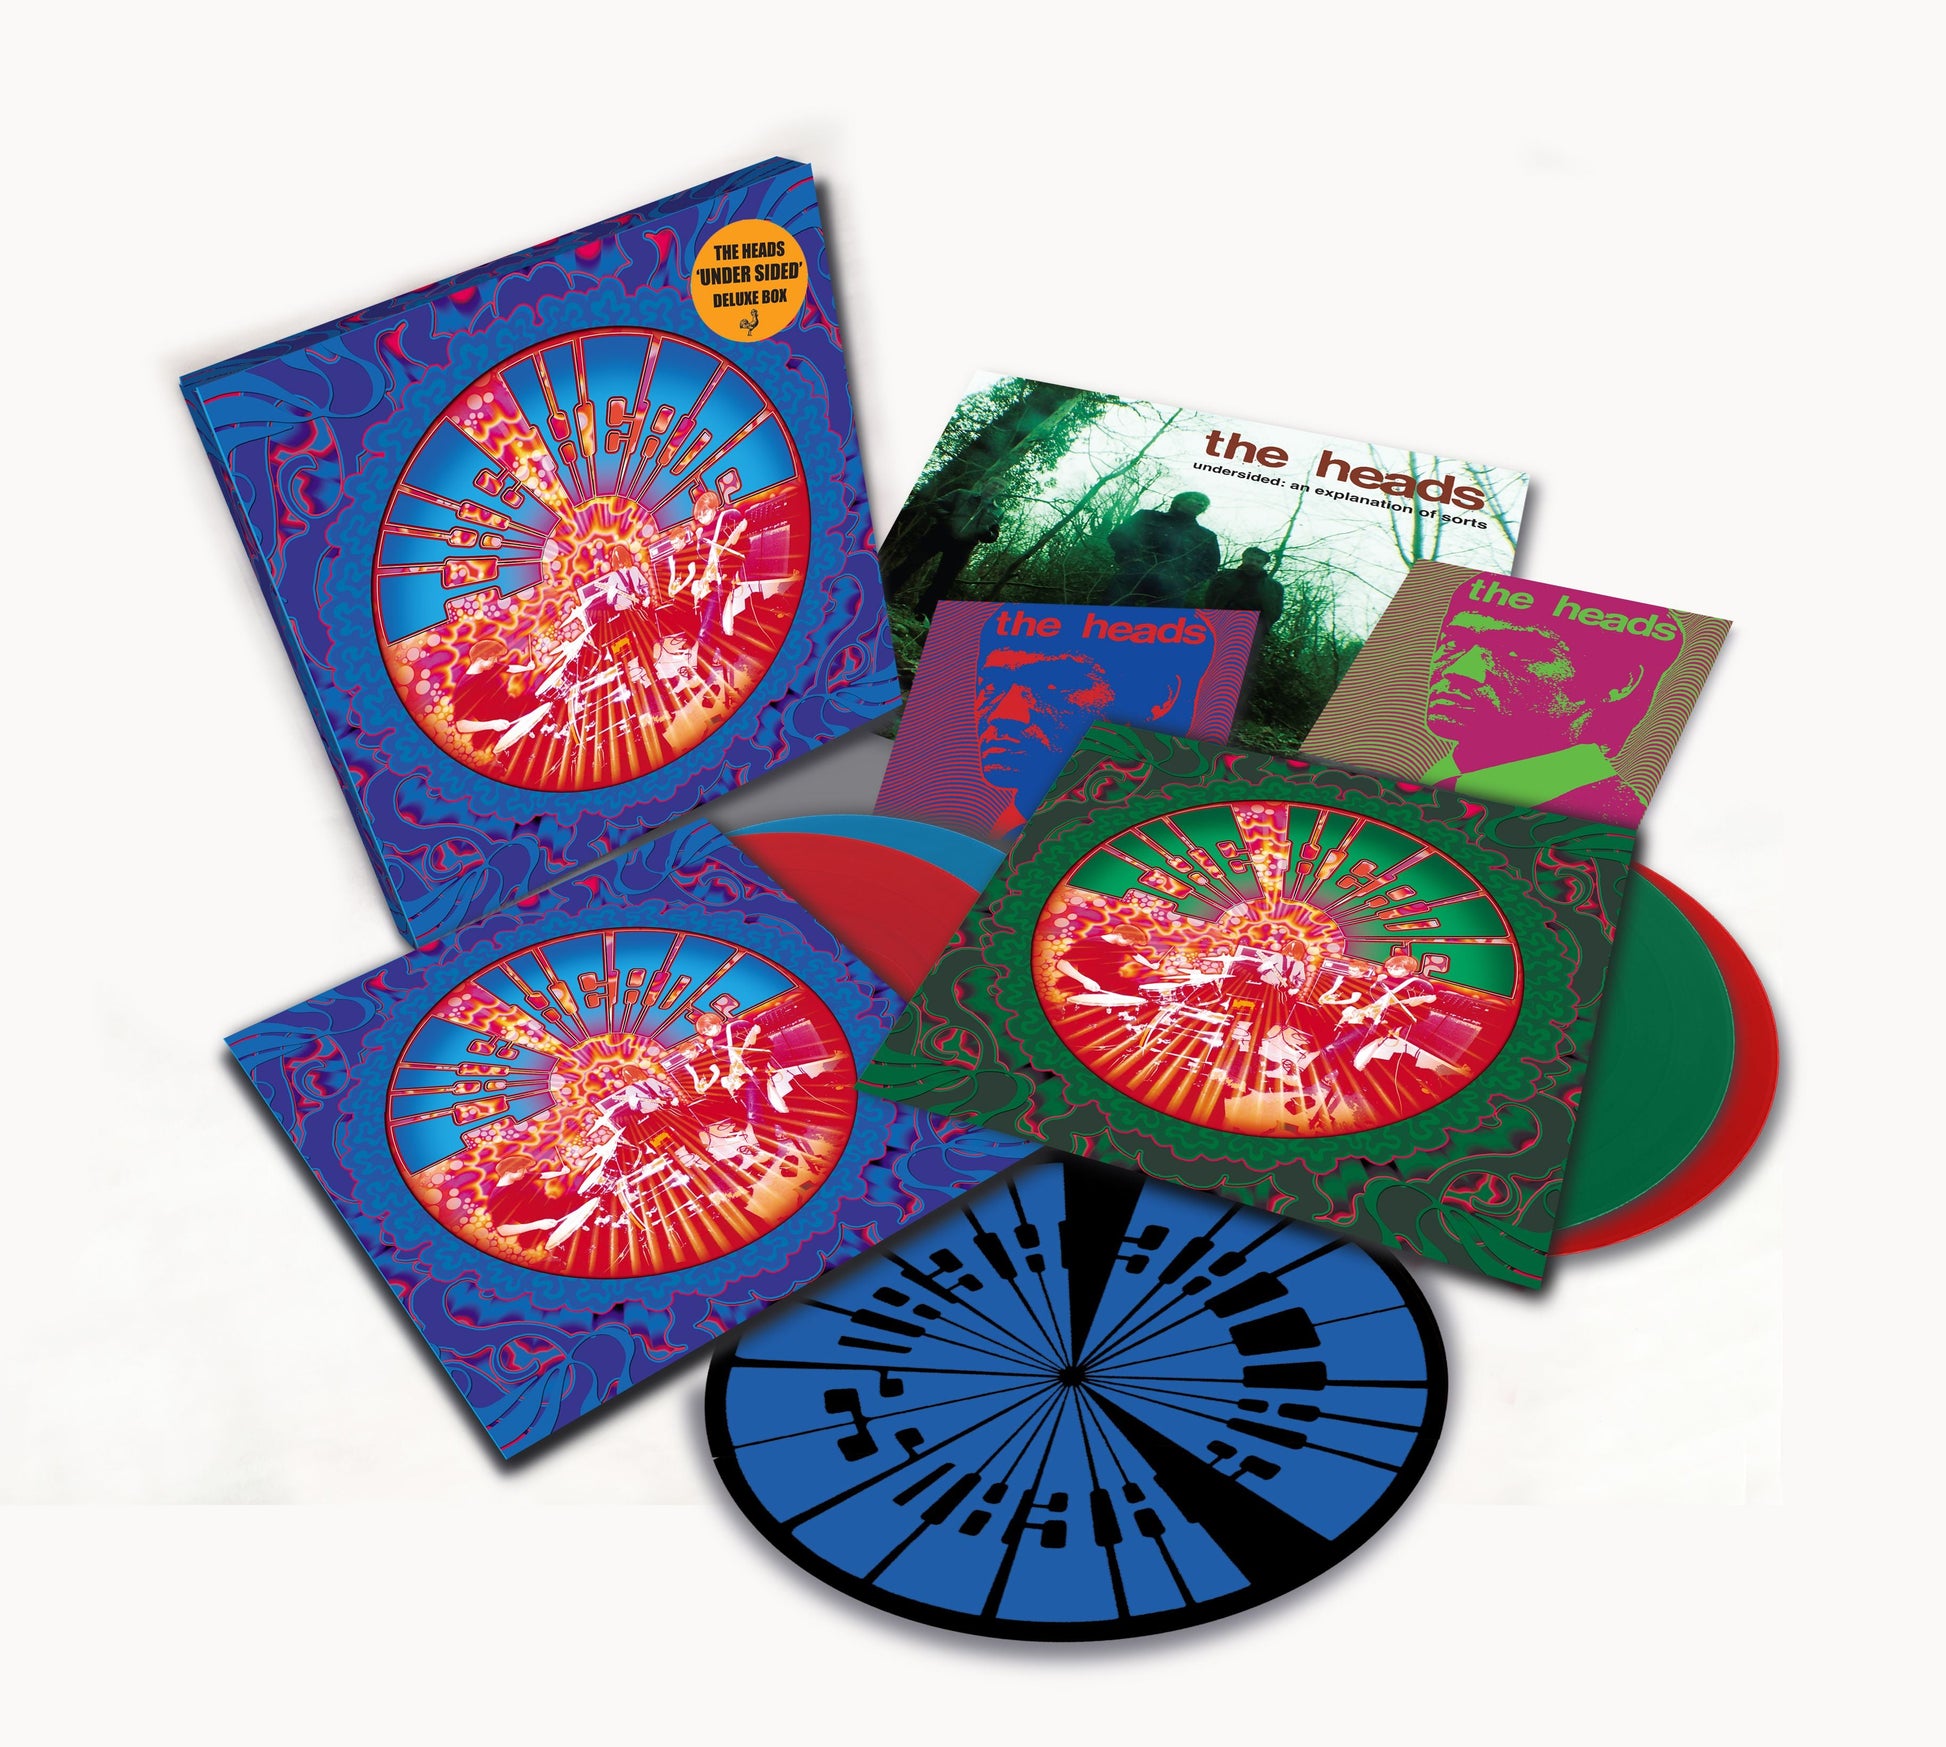 Arcade Sound - The Heads - Under Sided (20th Anniversary) - CD / 2xLP / 4xLP Boxset image